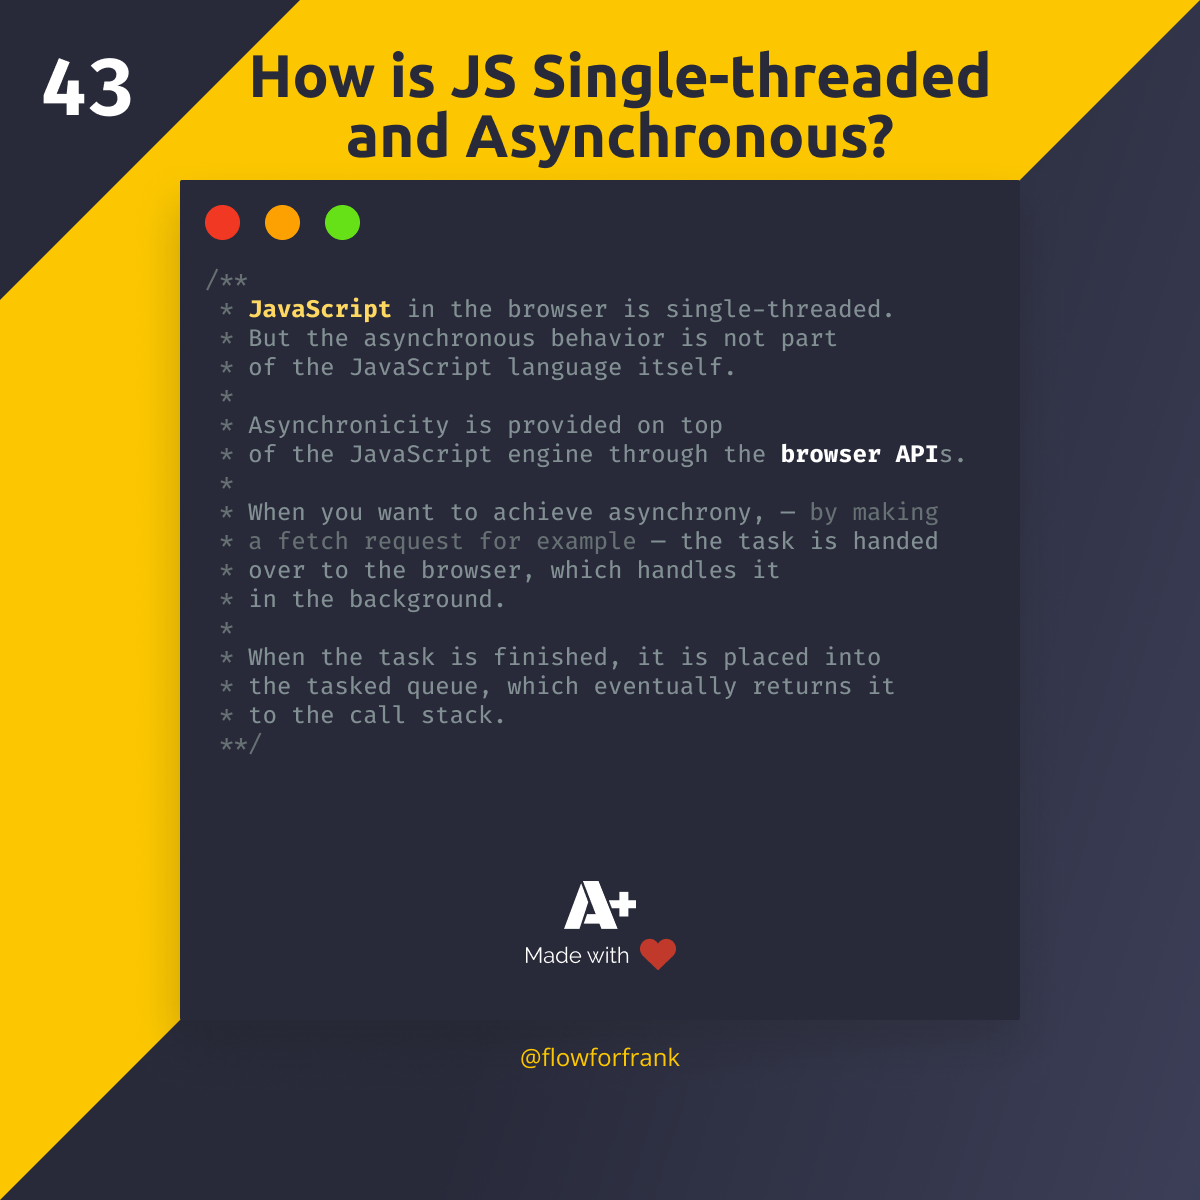 How is JavaScript single-threaded and asynchronous?